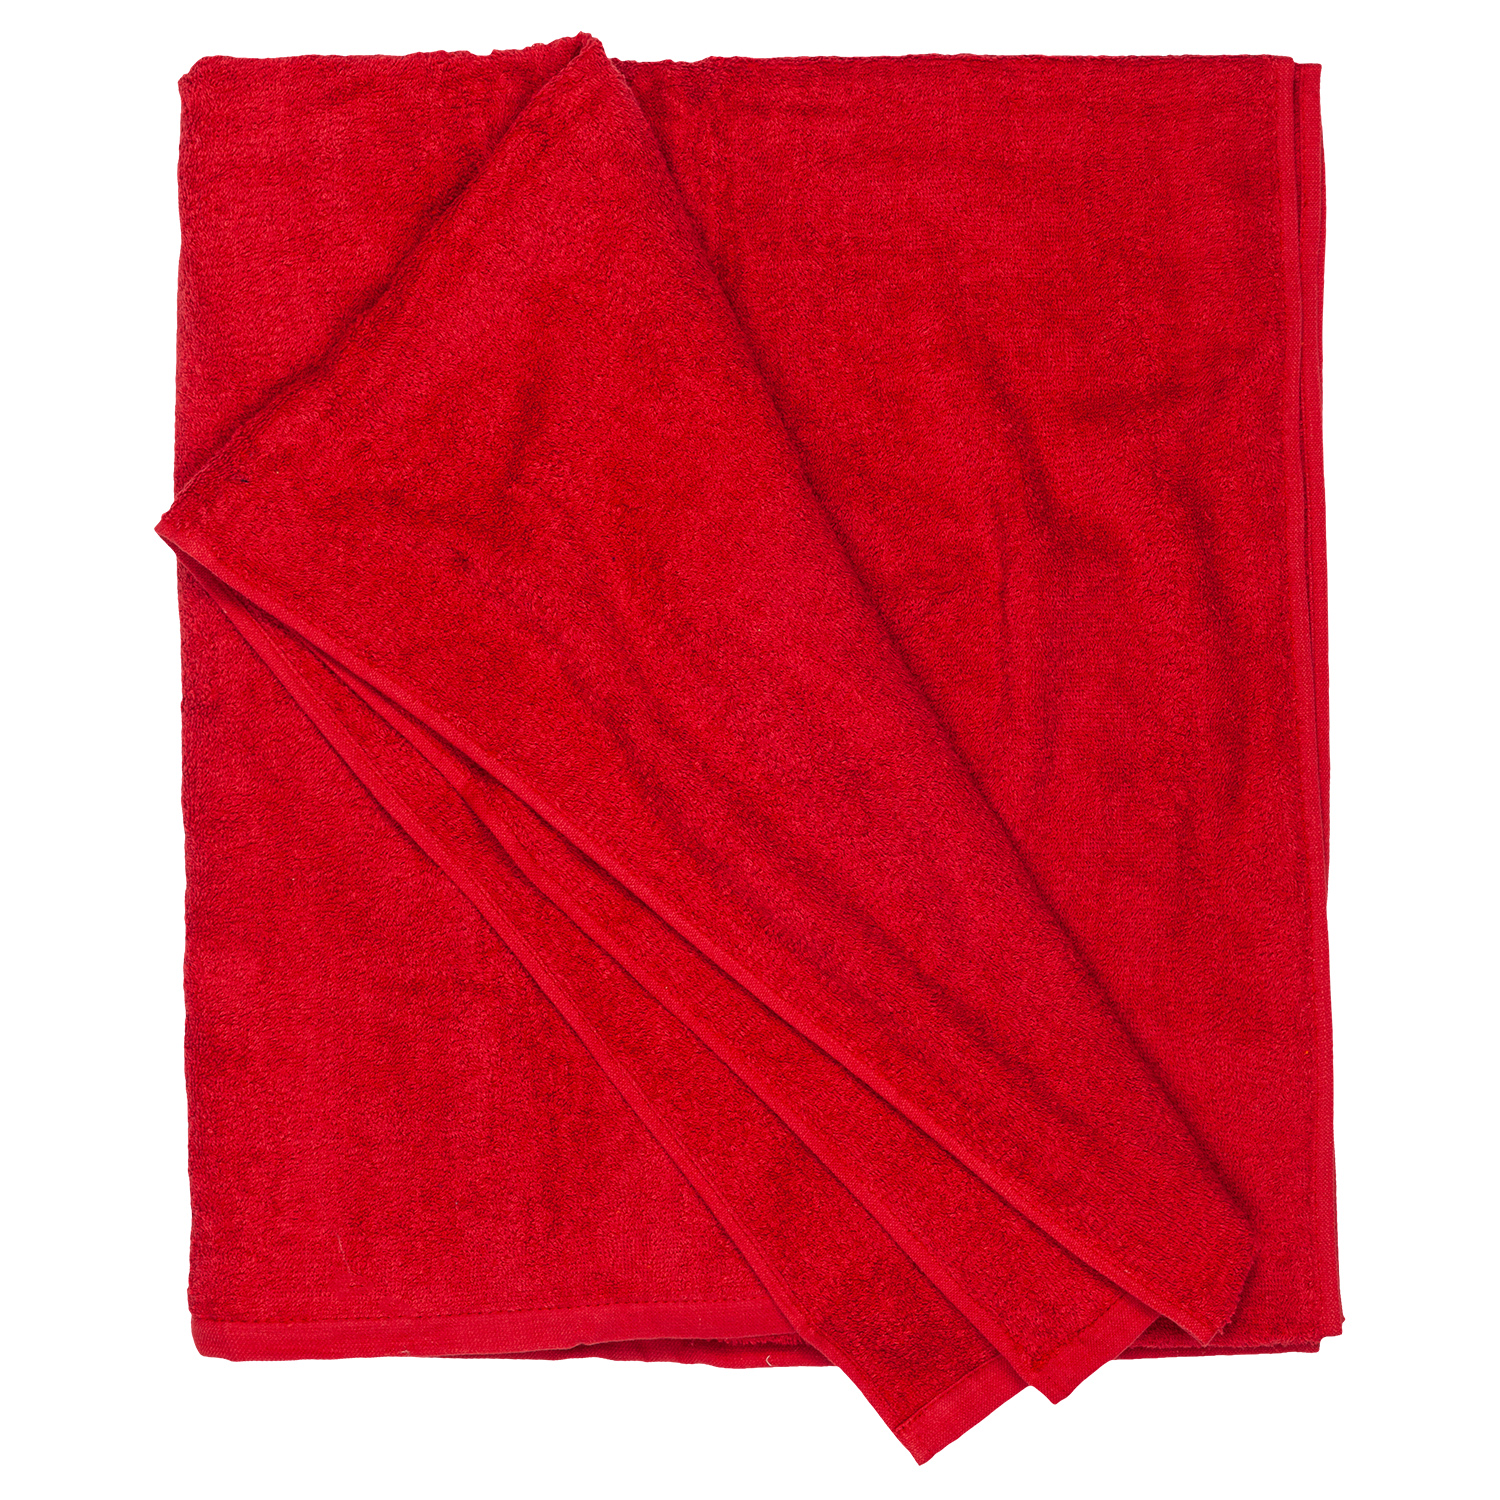 Bath towel series Helsinki in red by Adamo in large sizes 100x220 cm or 155x220 cm